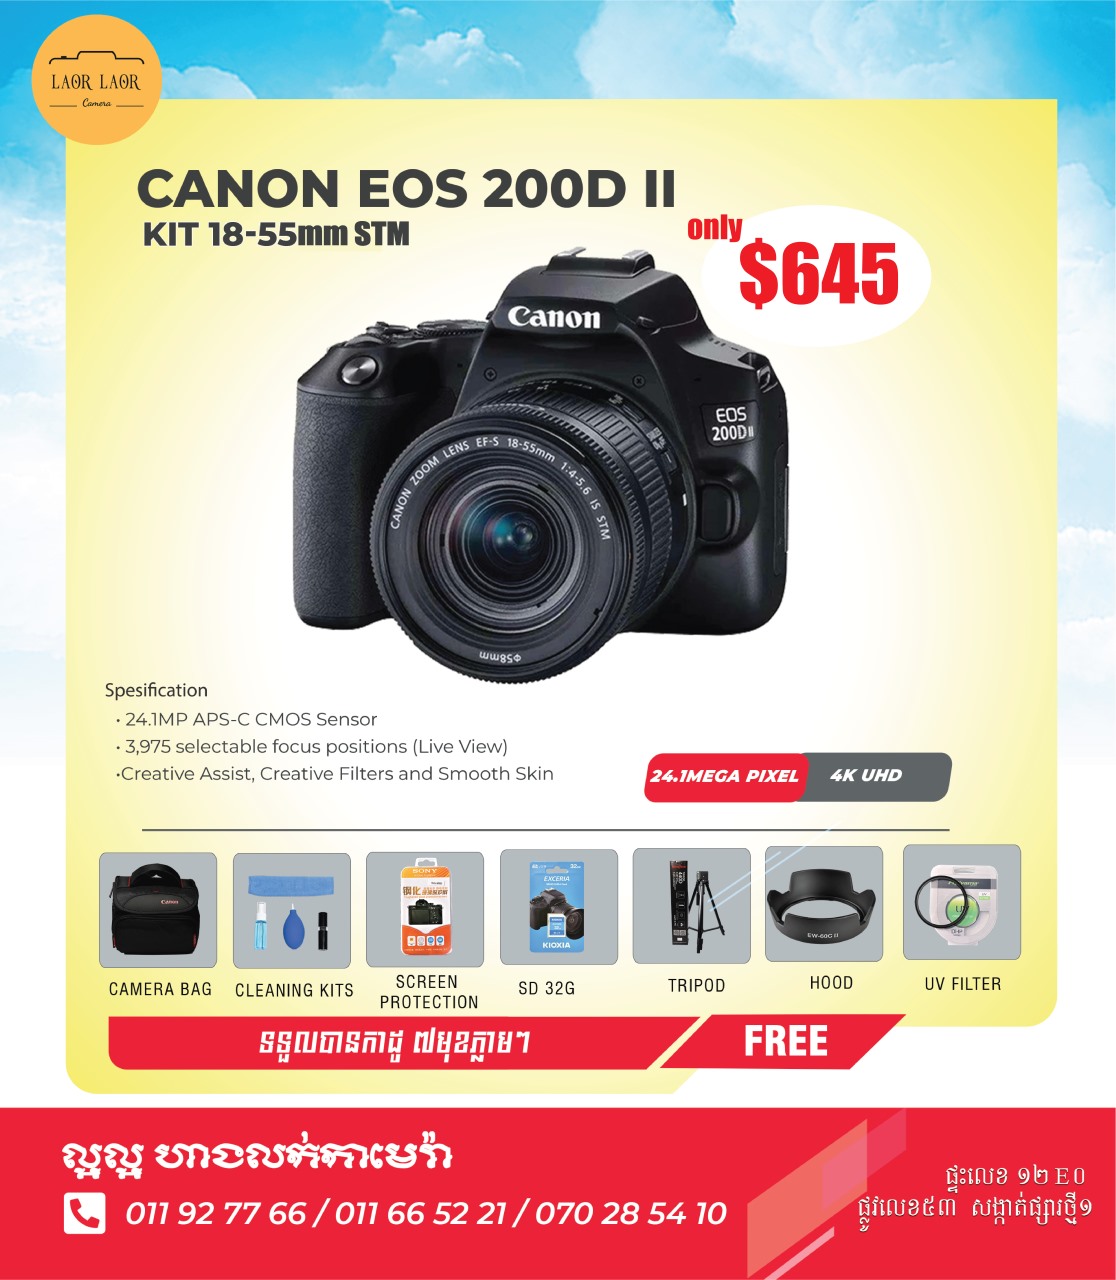 Canon 200D II kit 18-55mm STM (set)